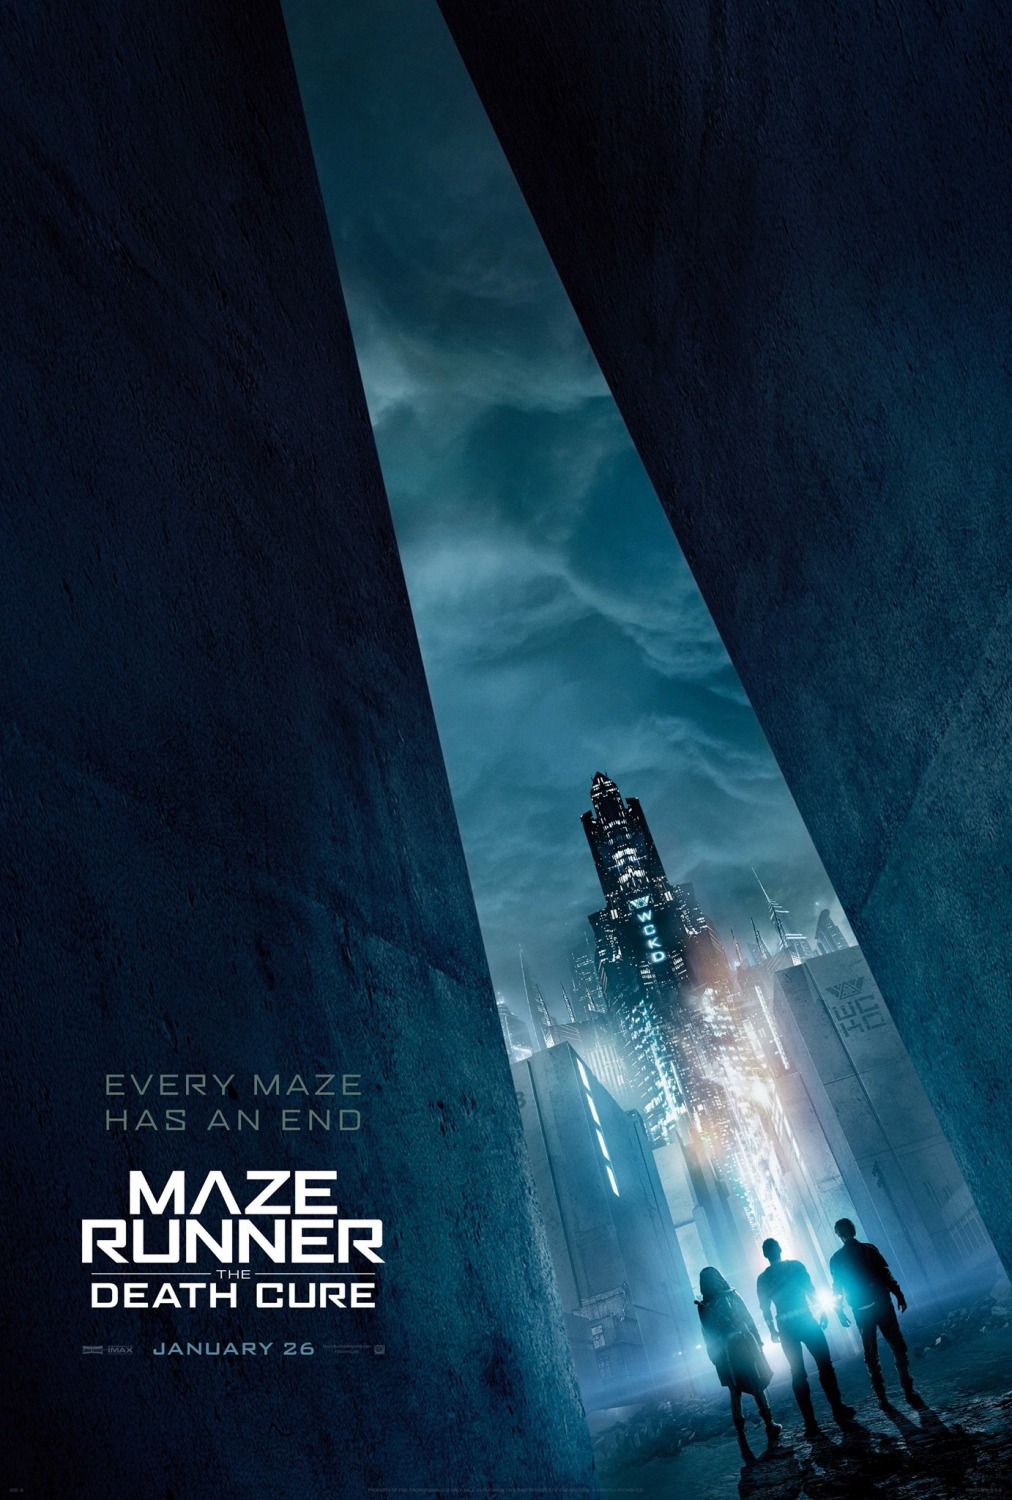 The Maze Runner - Film Review